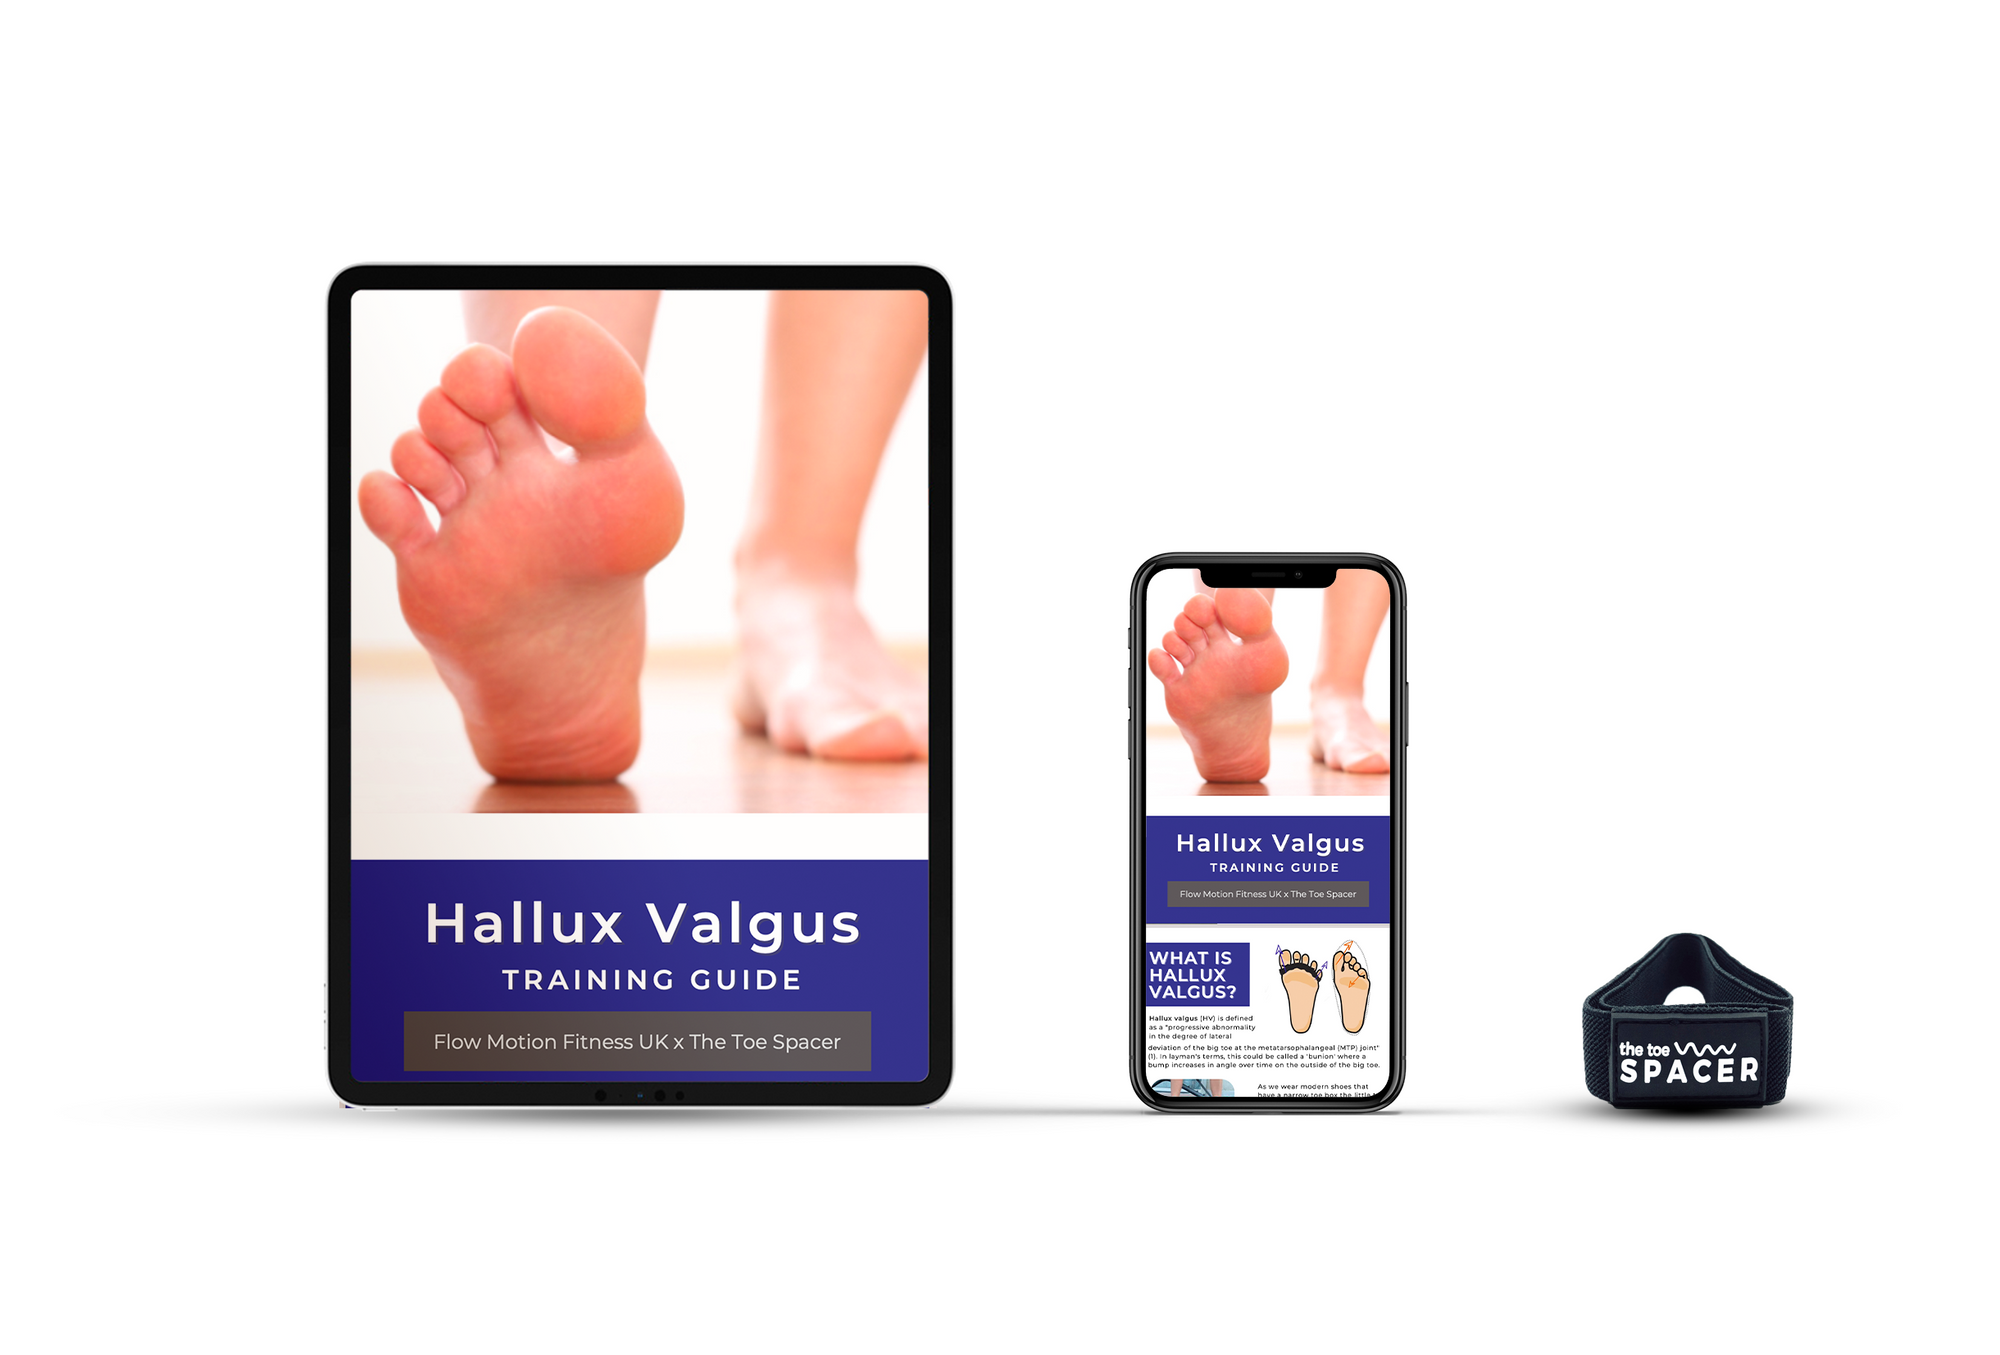 Hallux Valgus (Bunion) Program (15% off launch price)